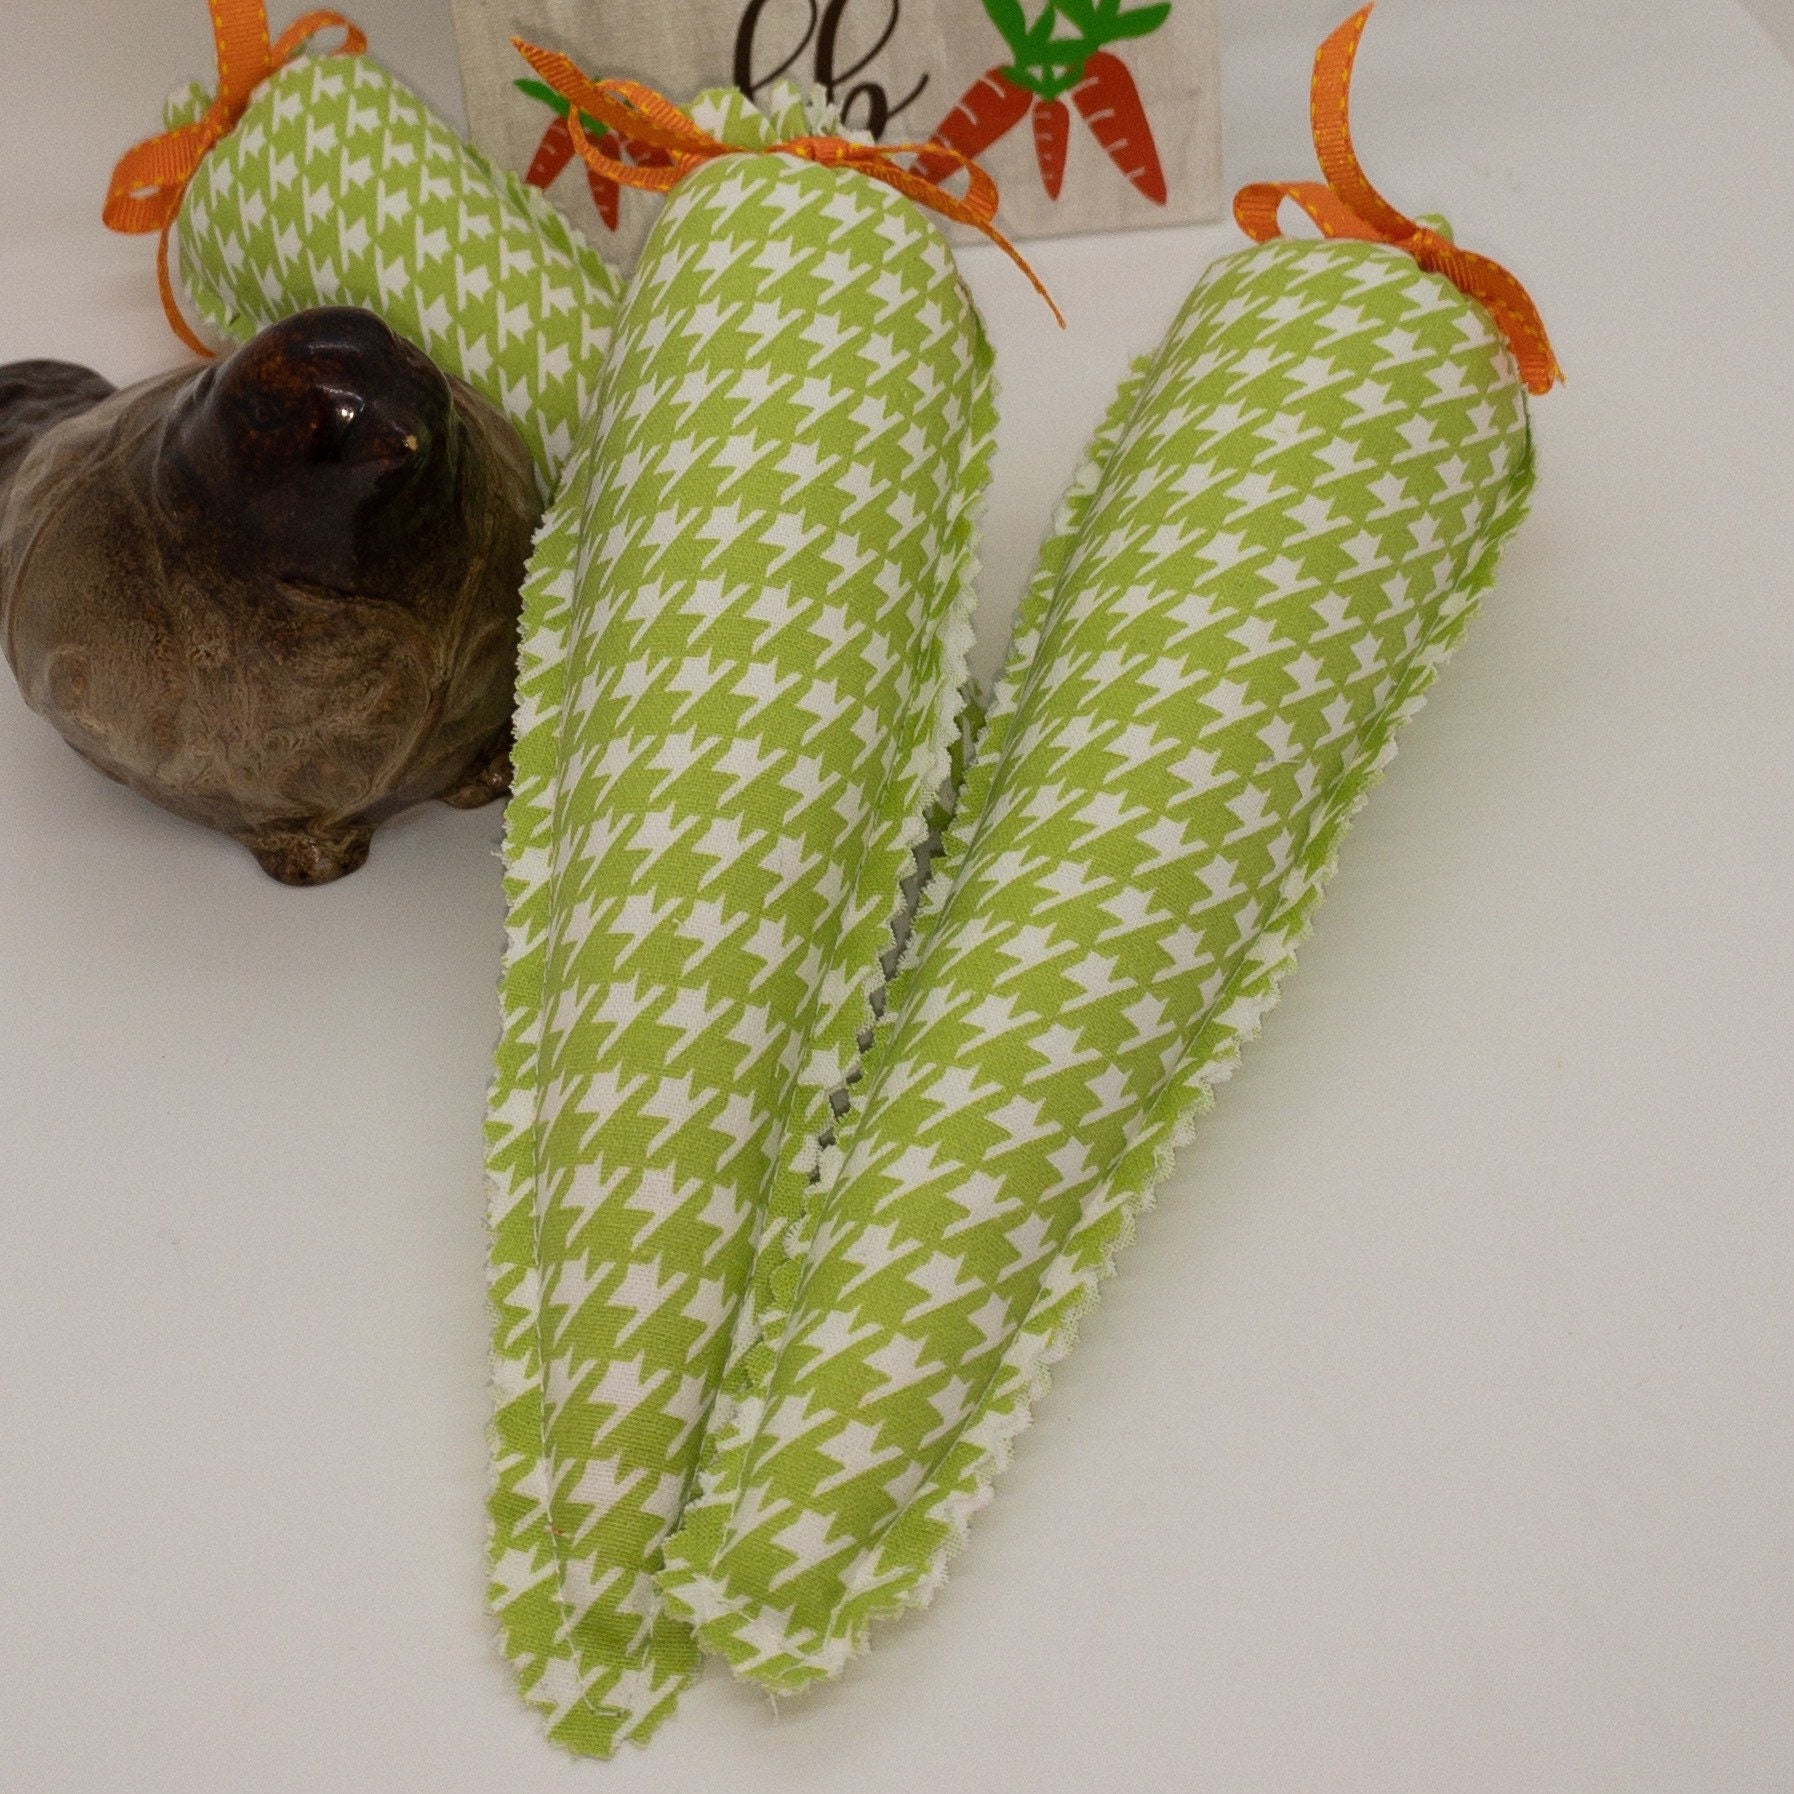 Easter Carrots|Handmade Fabric Carrots|Fabric Easter Carrots|Easter Basket Filler|Tiered Tray Decor|Spring Decor|Wreath Filler|Rustic Carrot